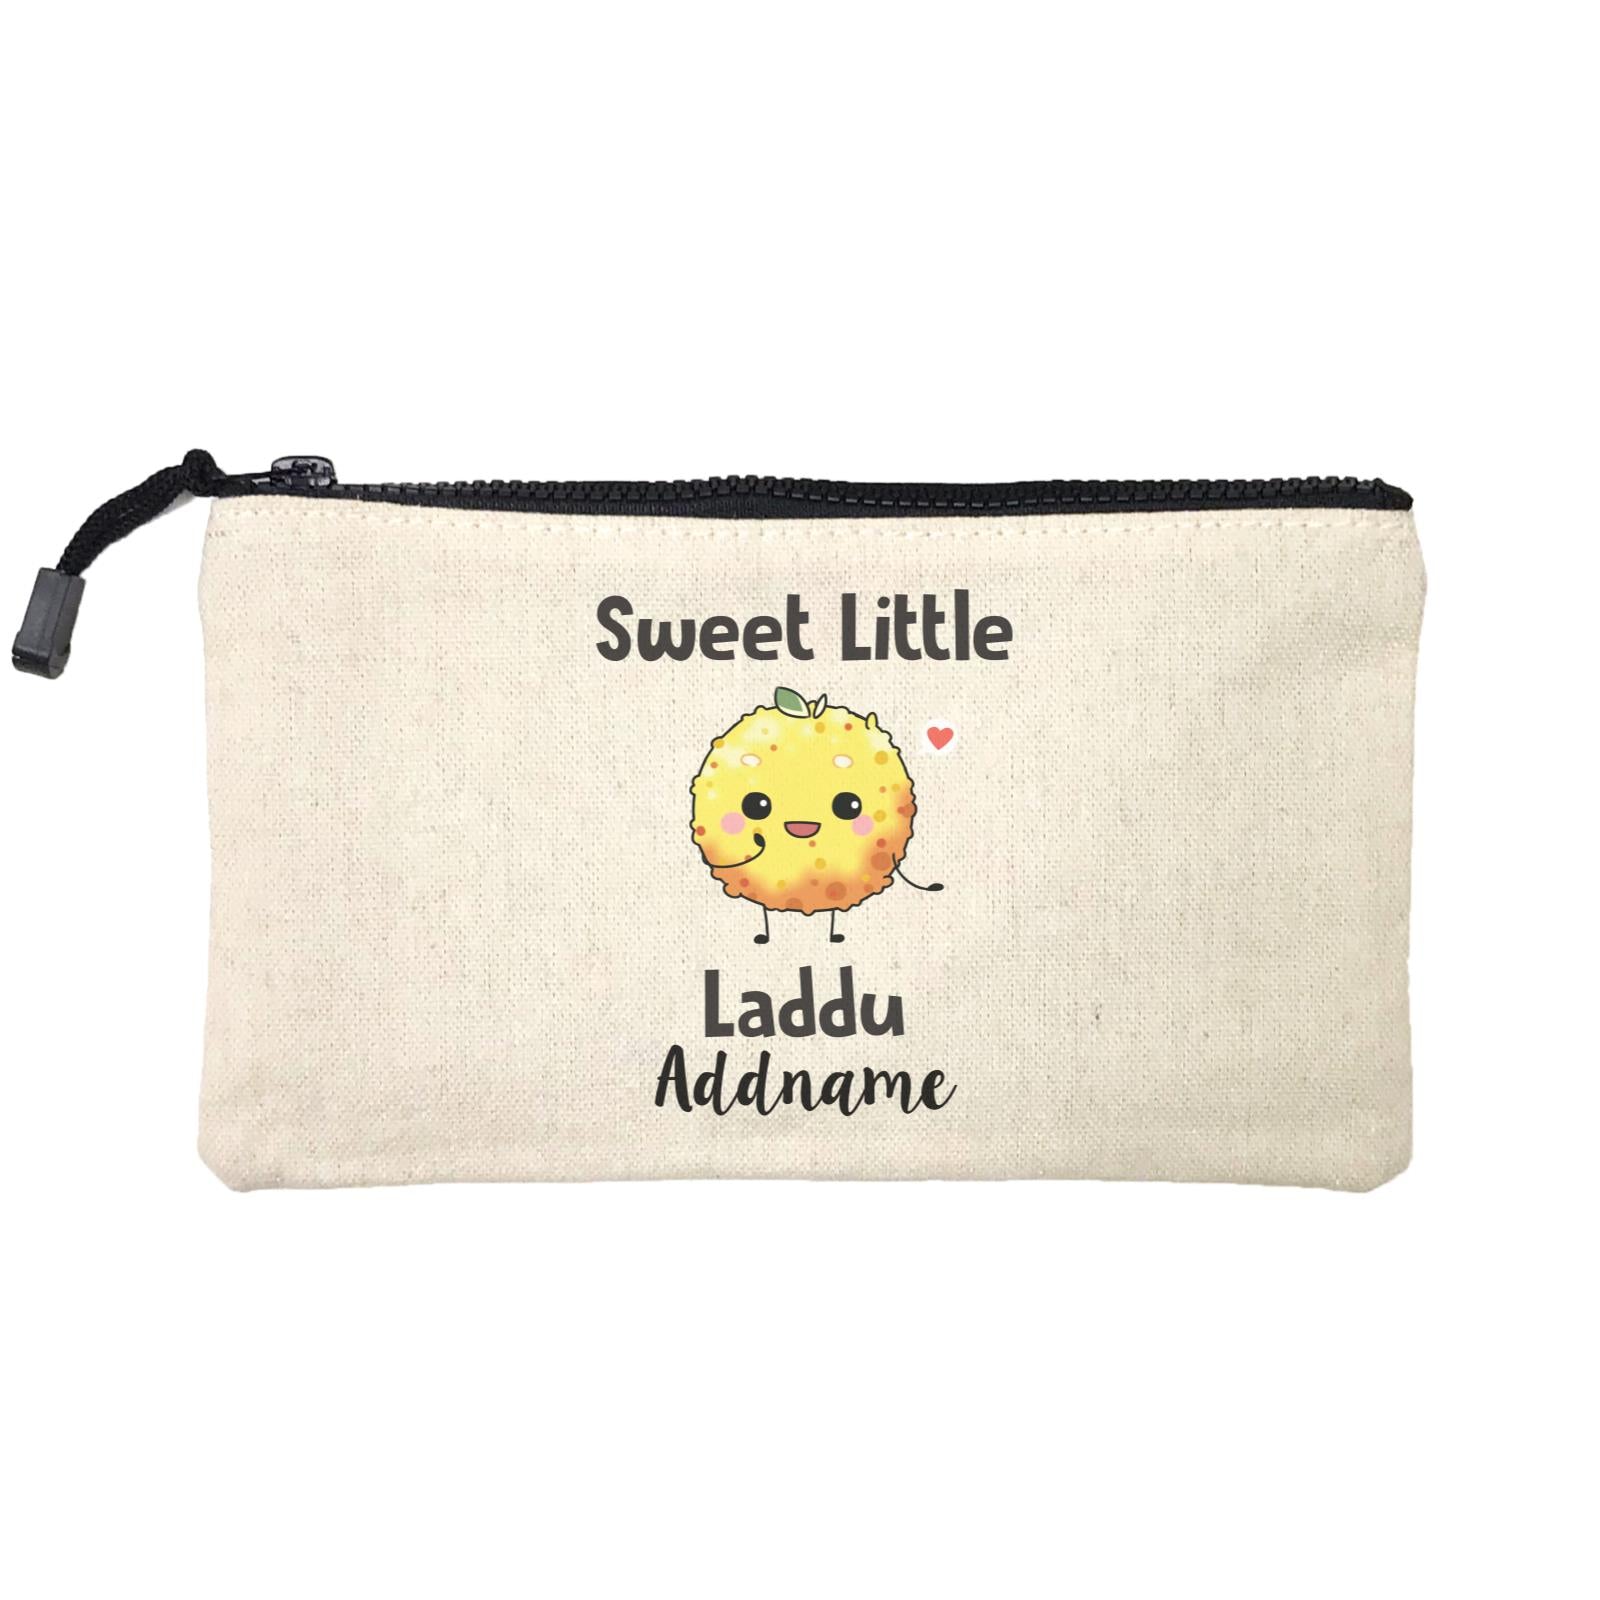 Deepavali Cute Sweet Little Laddu Addname Mini Accessories Stationery Pouch